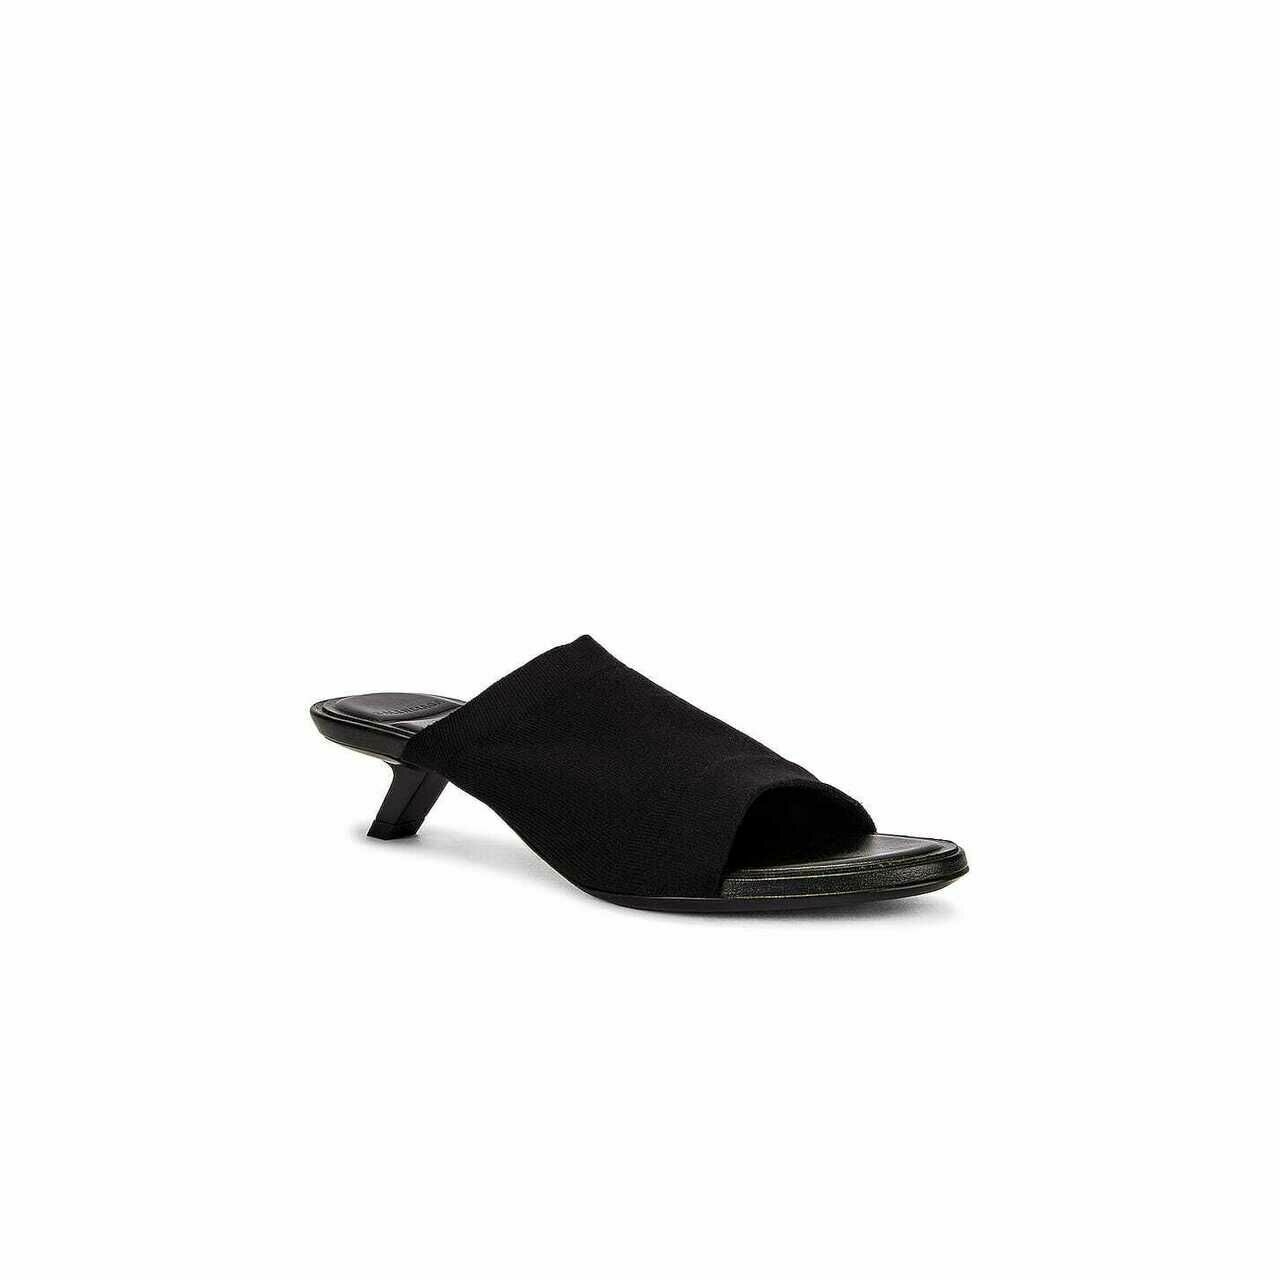 Balenciaga Black Heels